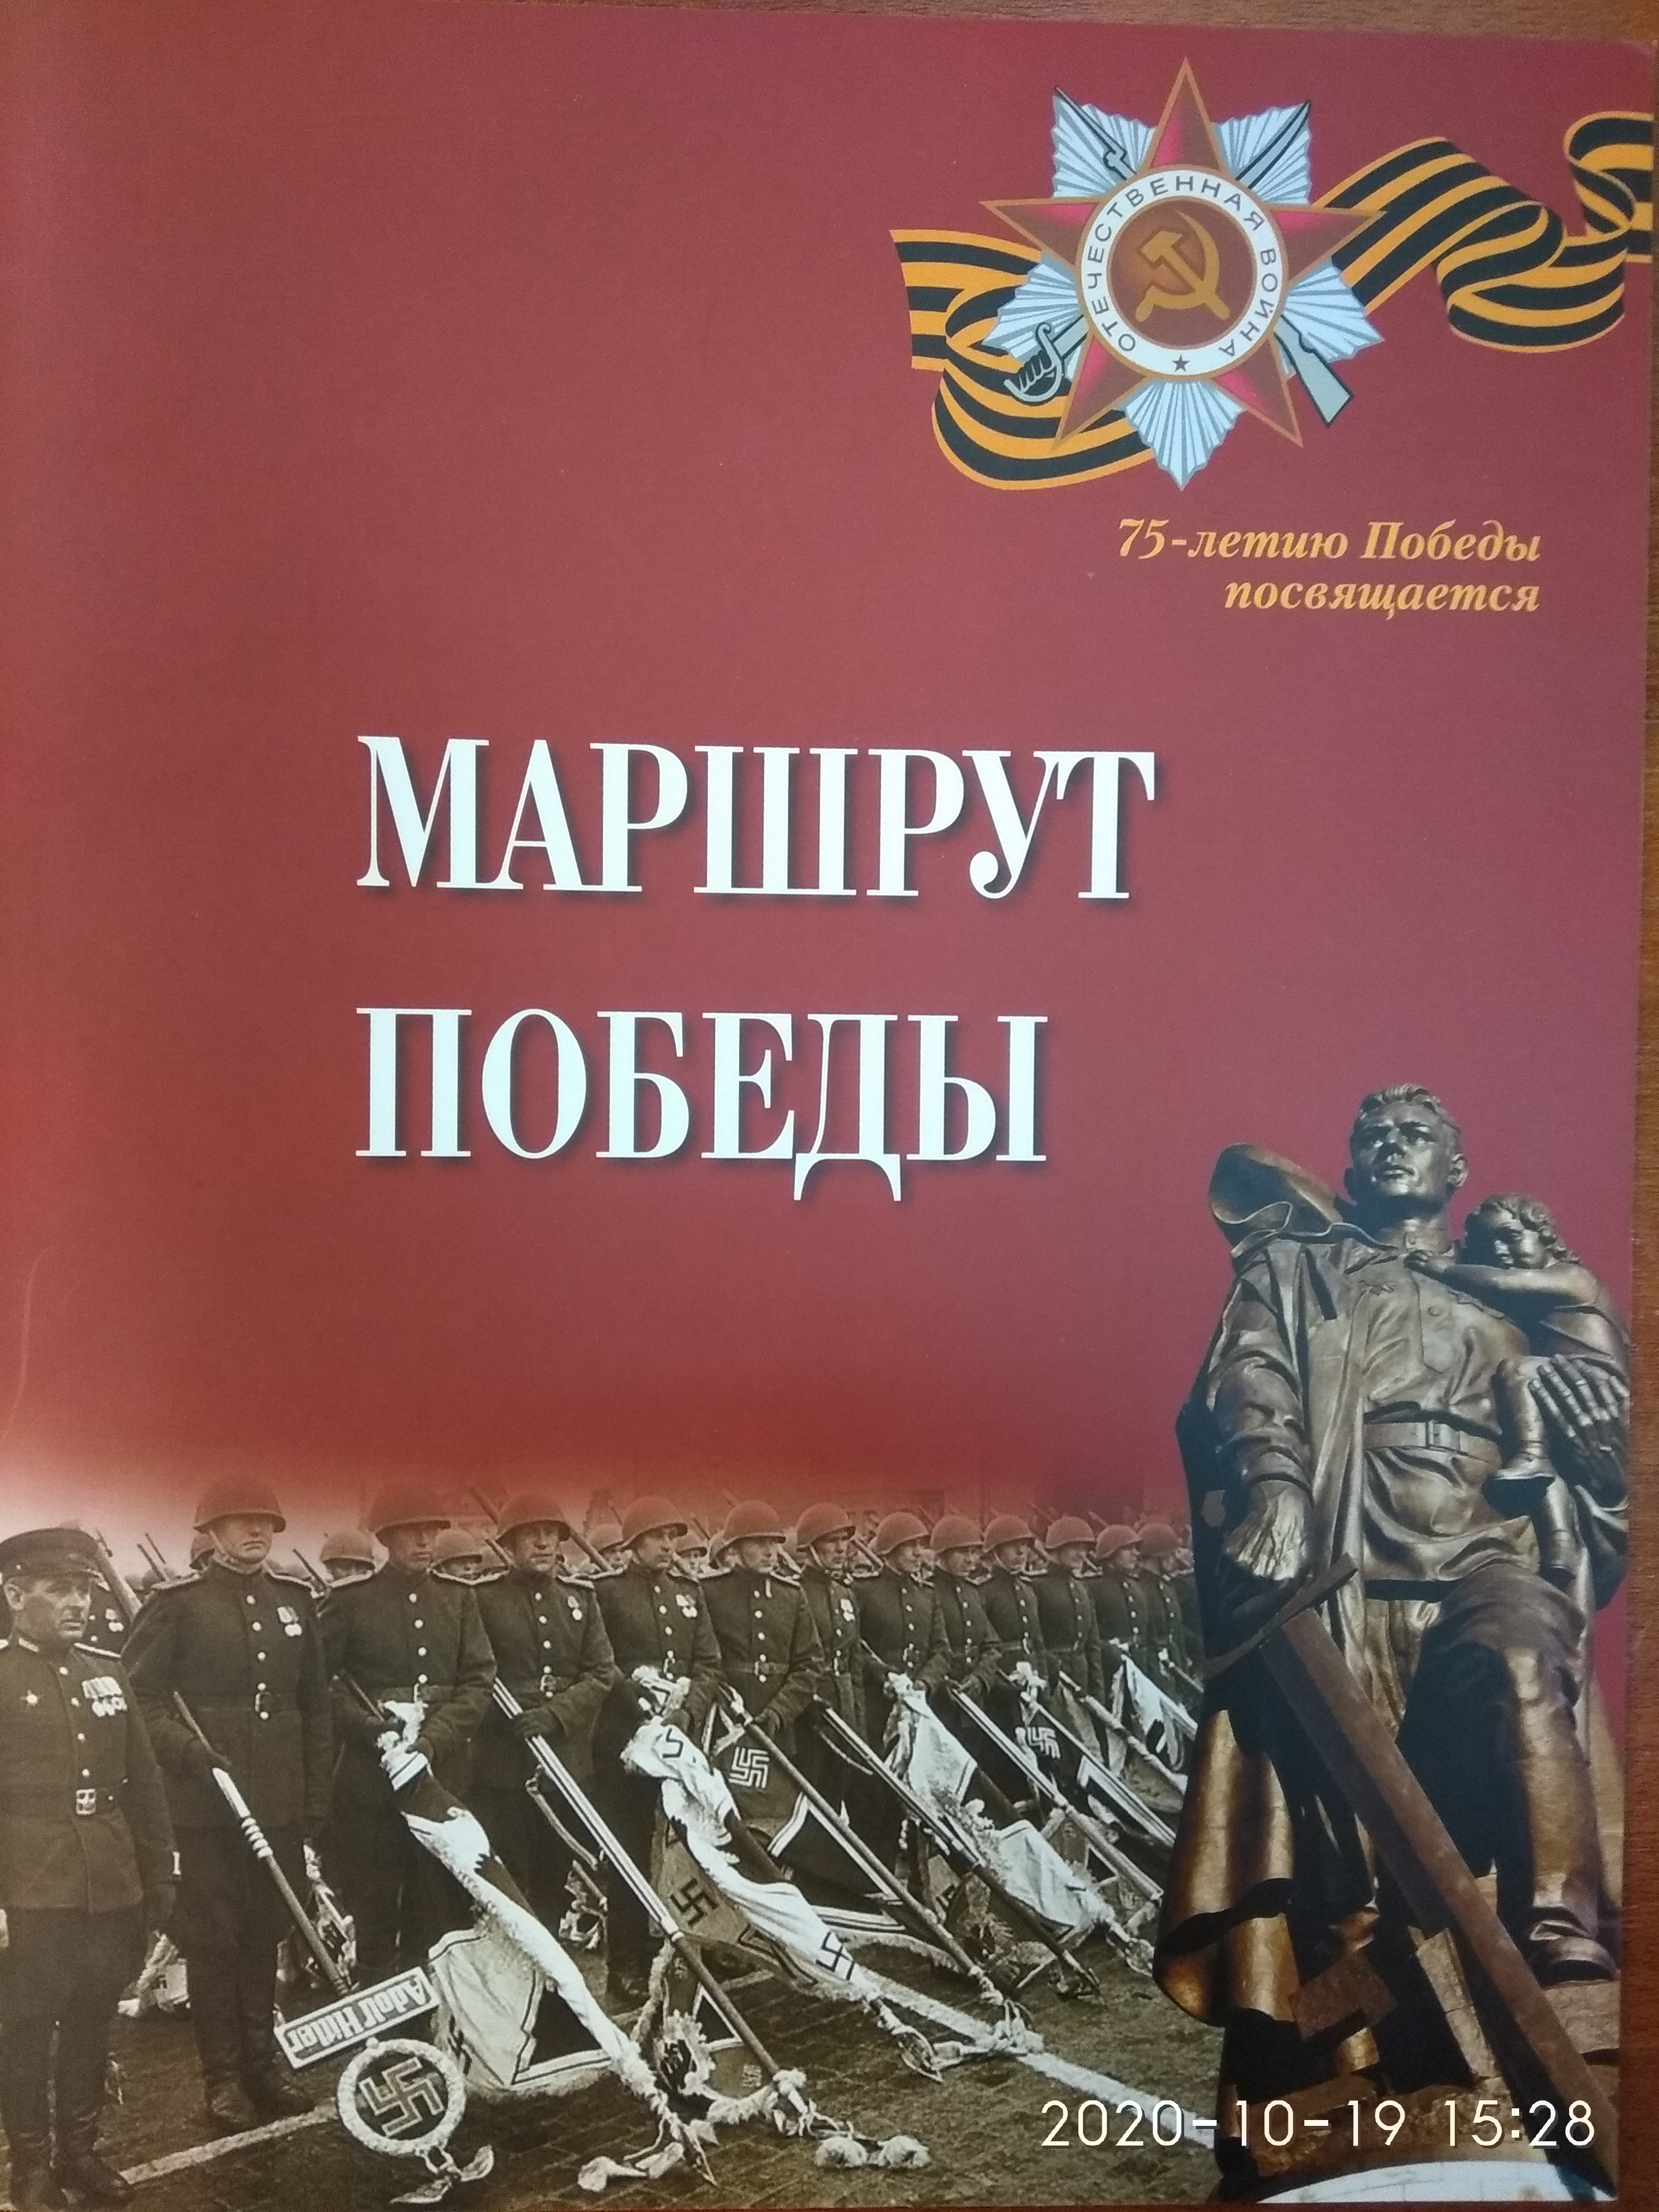 Автор книги «Маршрут Победы» поблагодарил Михаила Клименко  